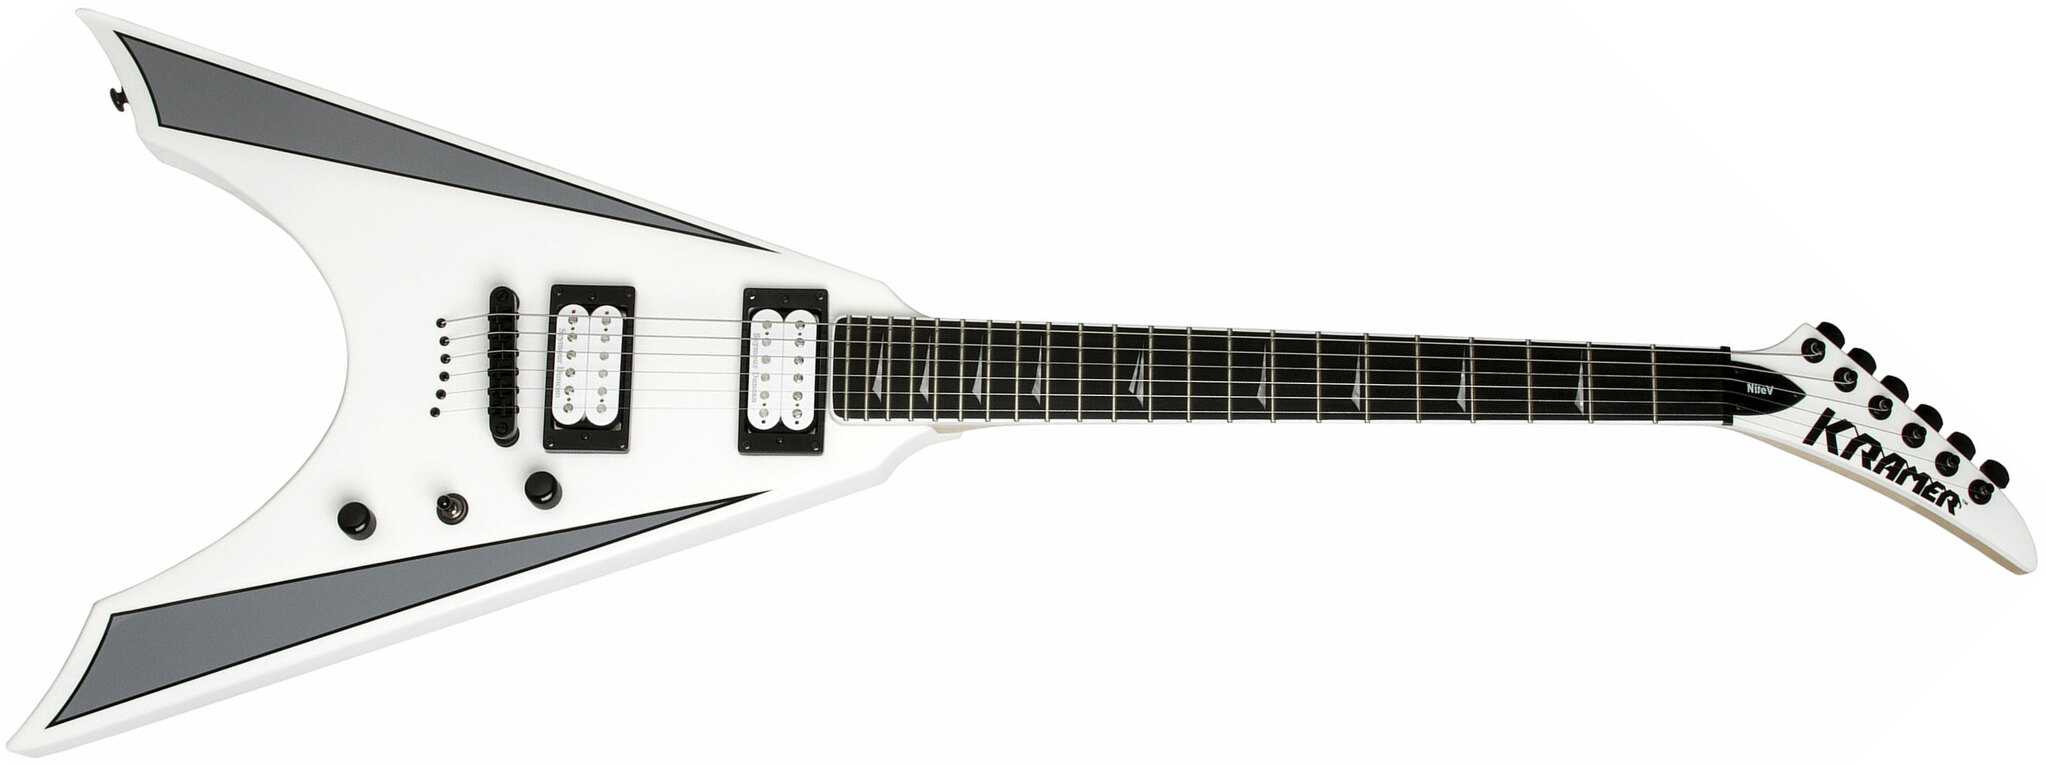 Kramer Nite-v Plus Hh Seymour Duncan Ht Eb - Alpine White - Metalen elektrische gitaar - Main picture